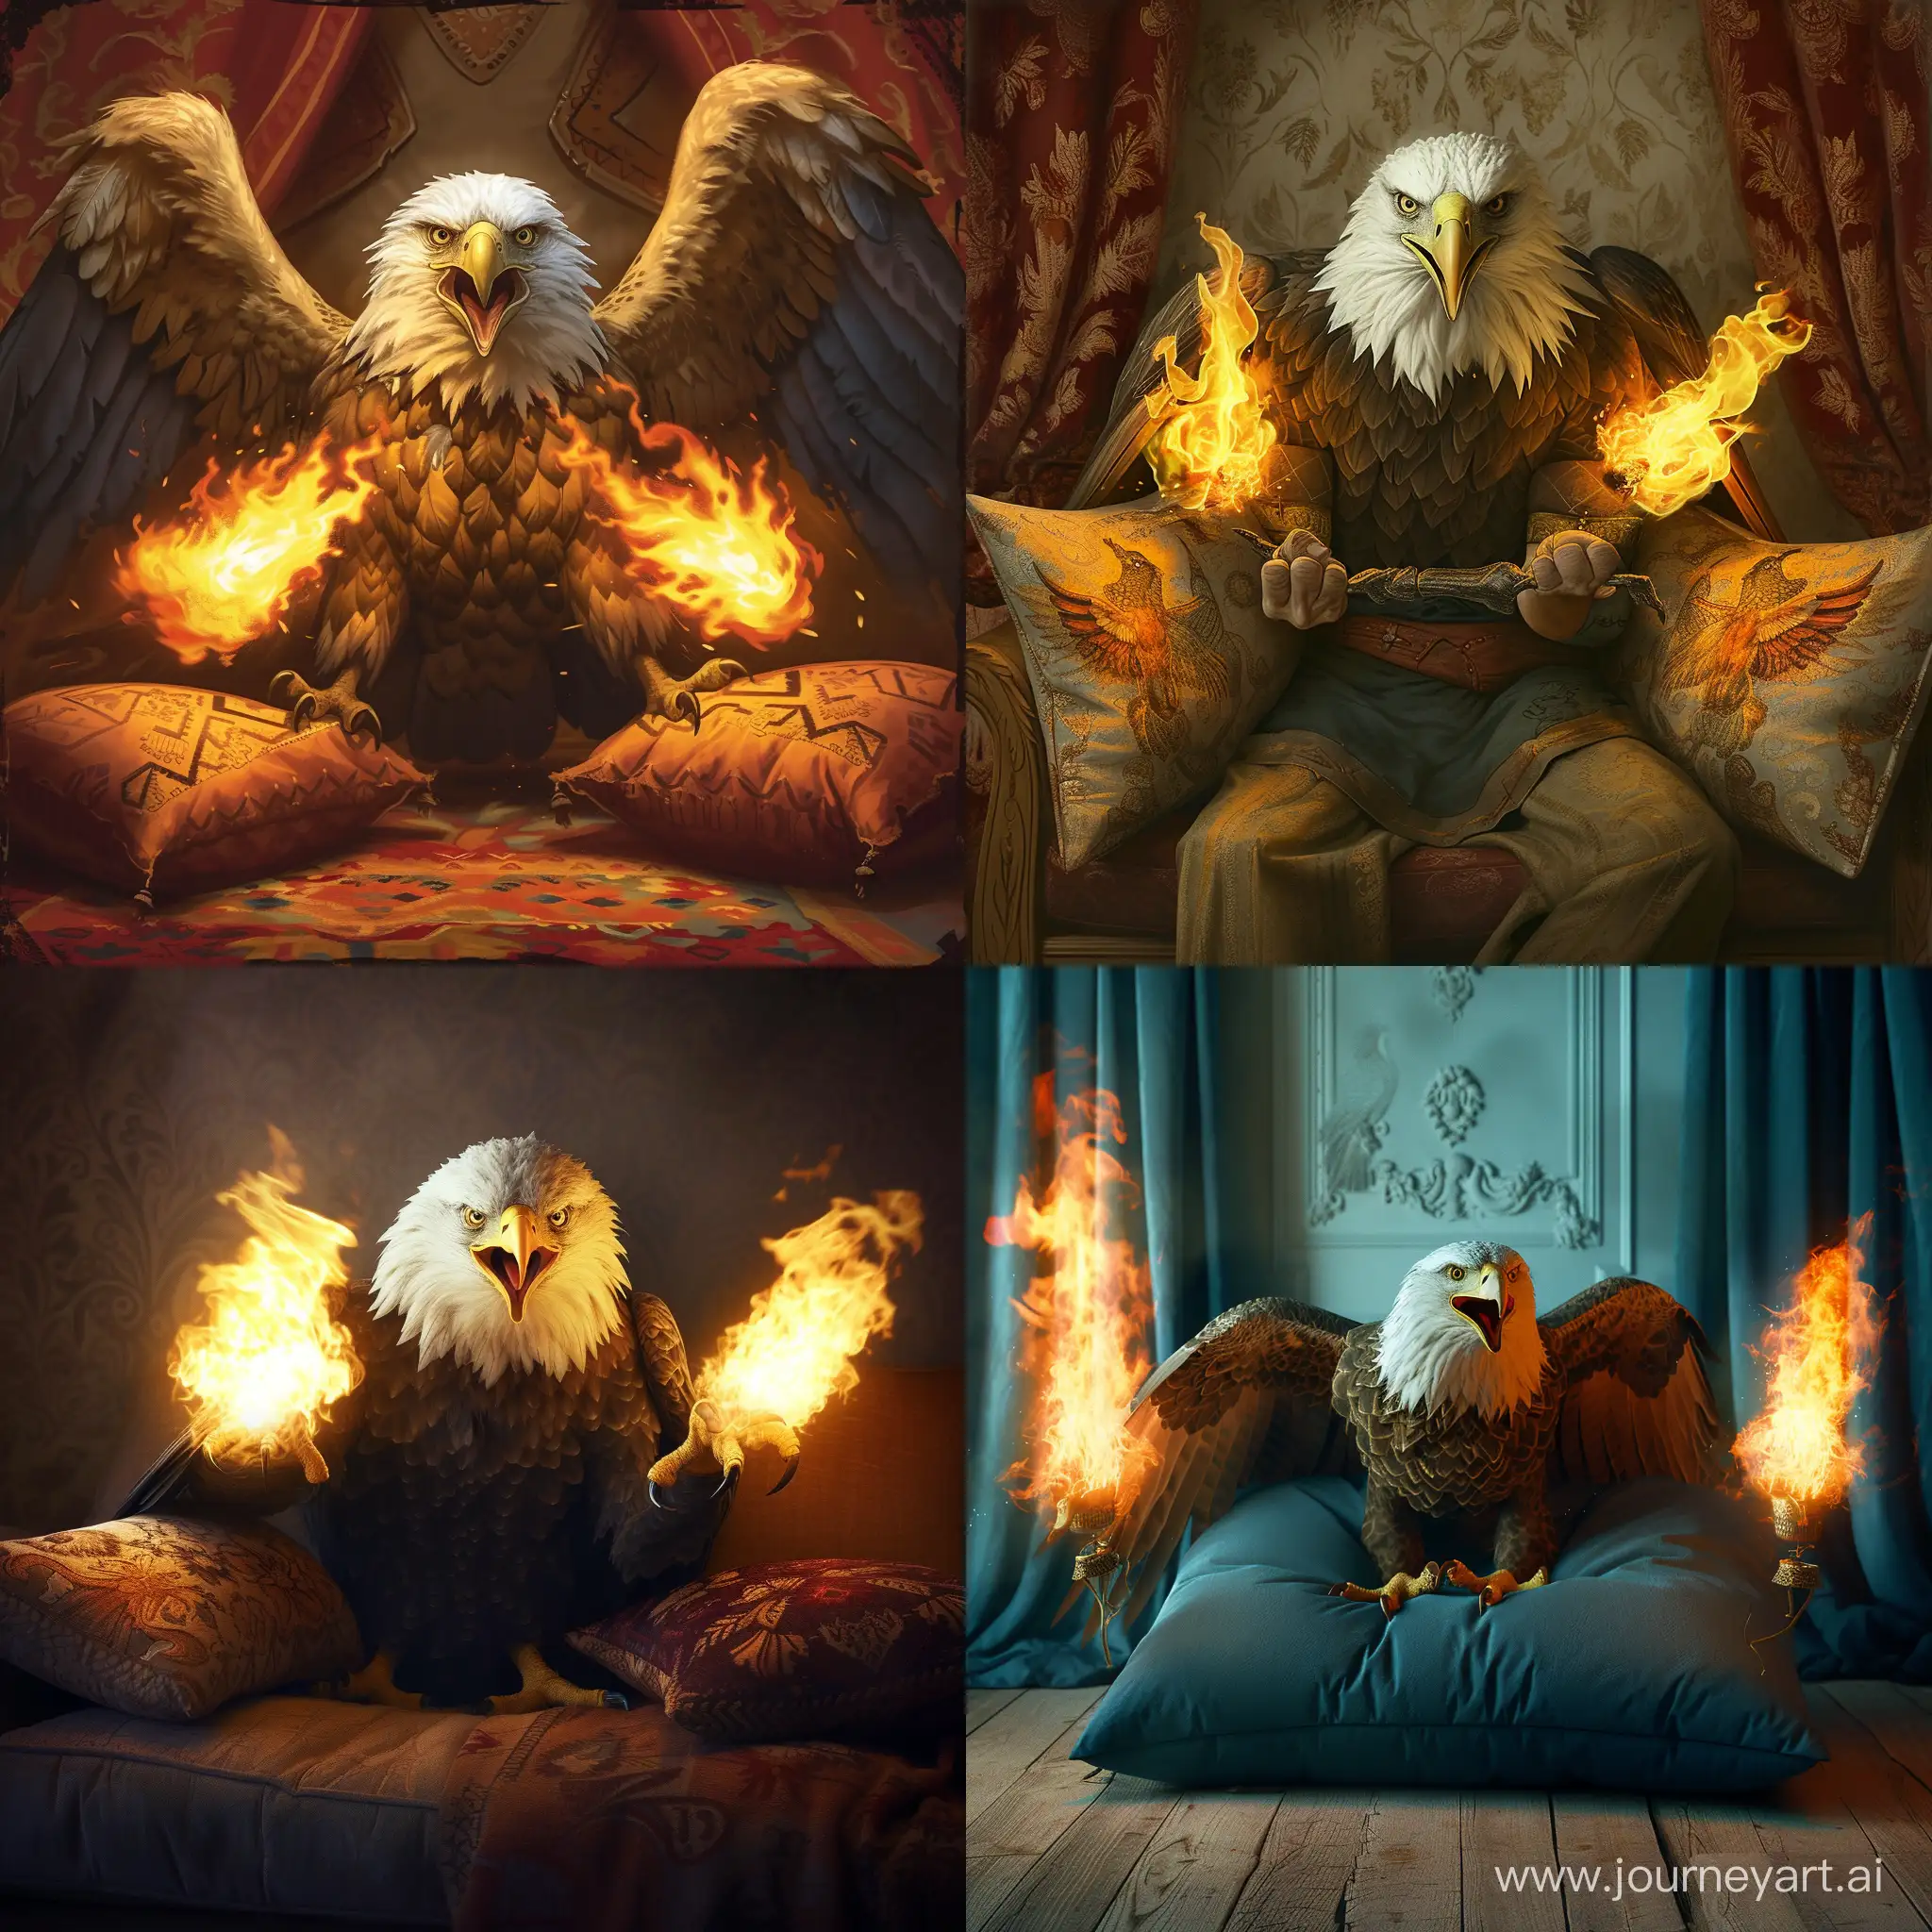 Fiery-Genie-Eagle-Unleashing-Wrath-with-Pillows